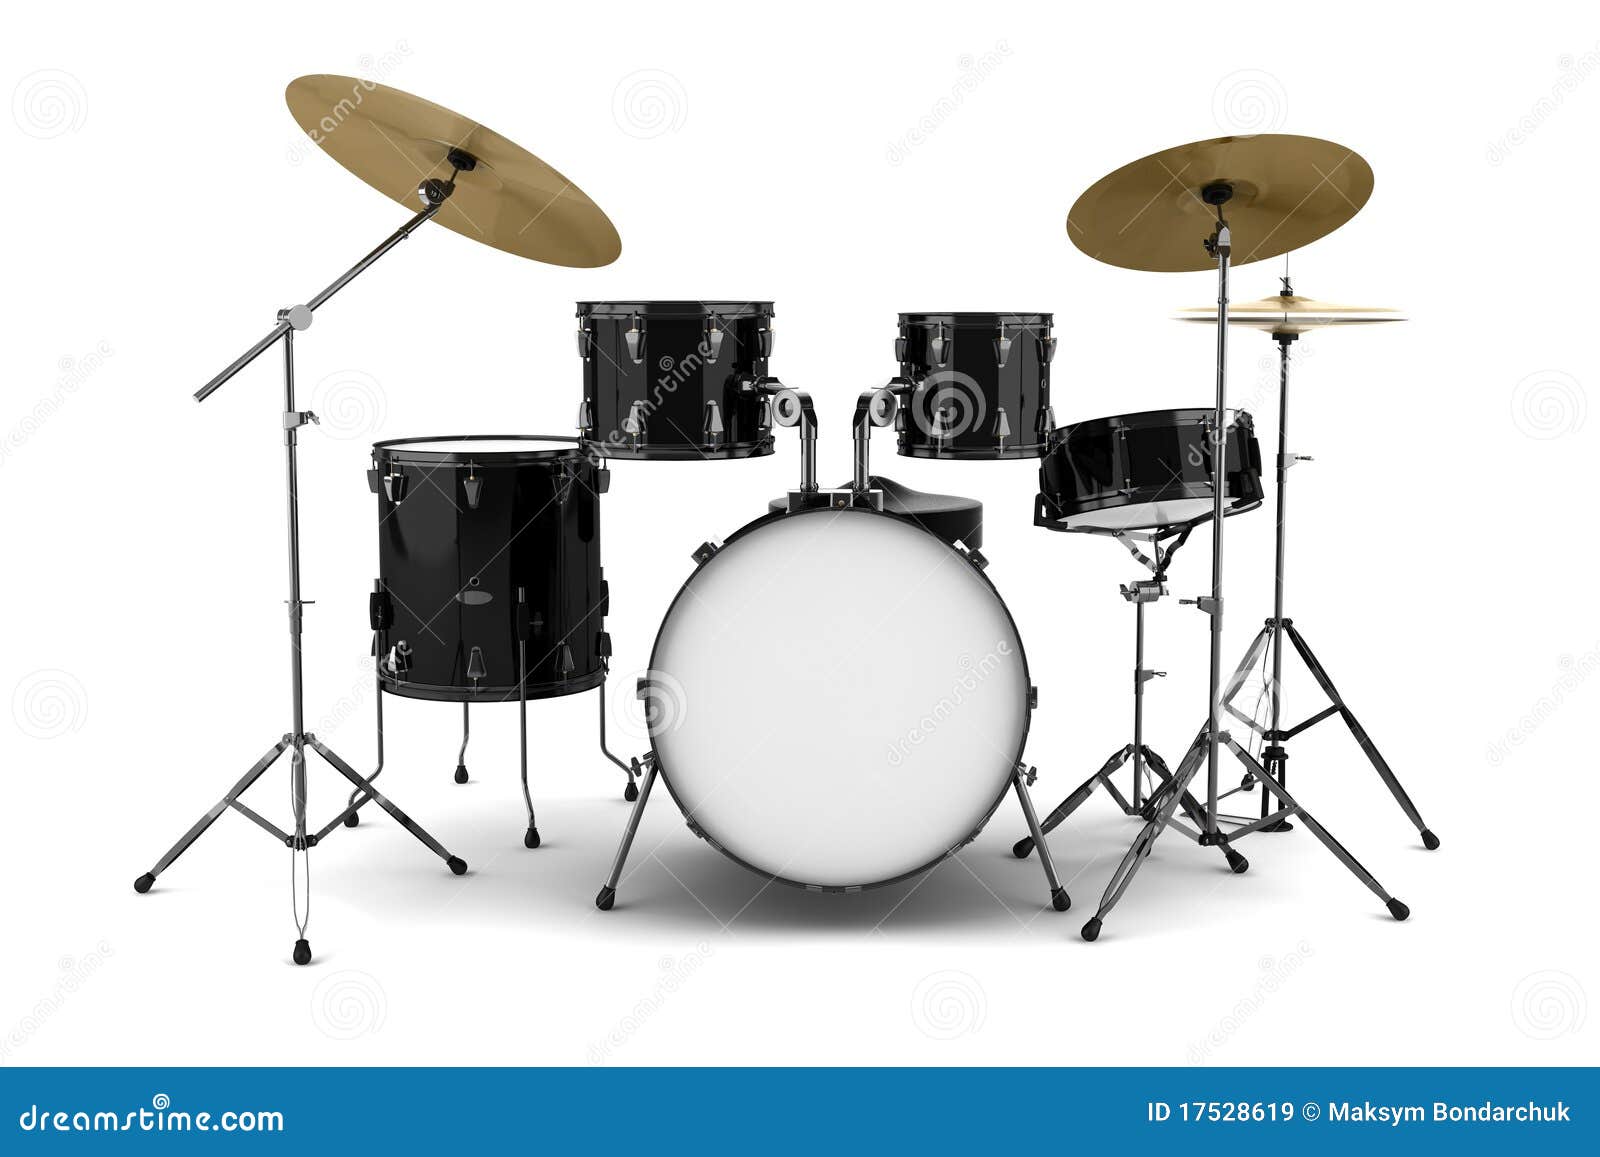 black drum kit  on white